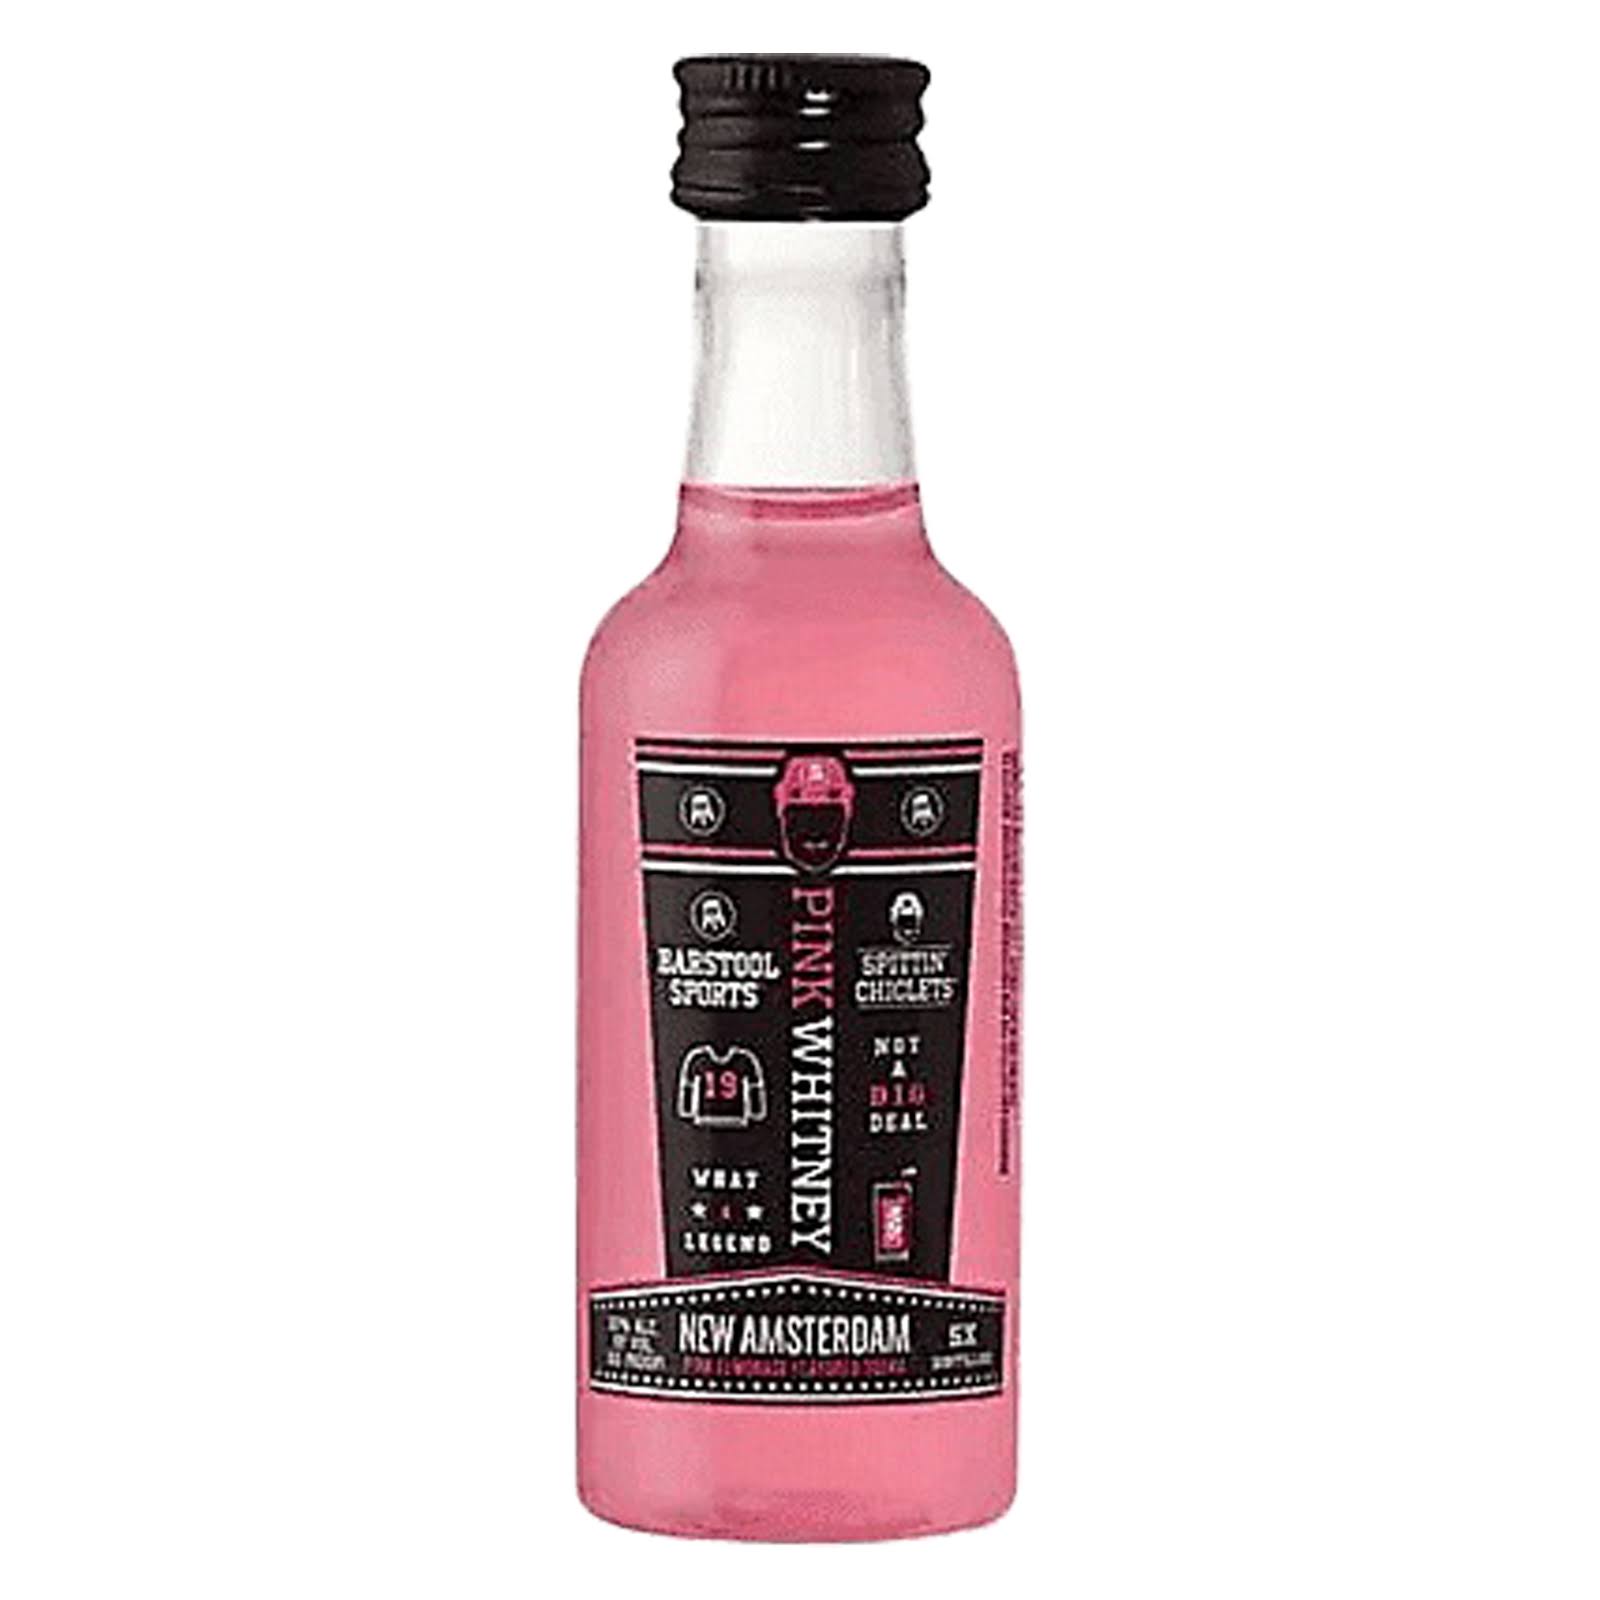 New Amsterdam Pink Whitney Vodka, Pink Lemonade Flavored - 50 ml